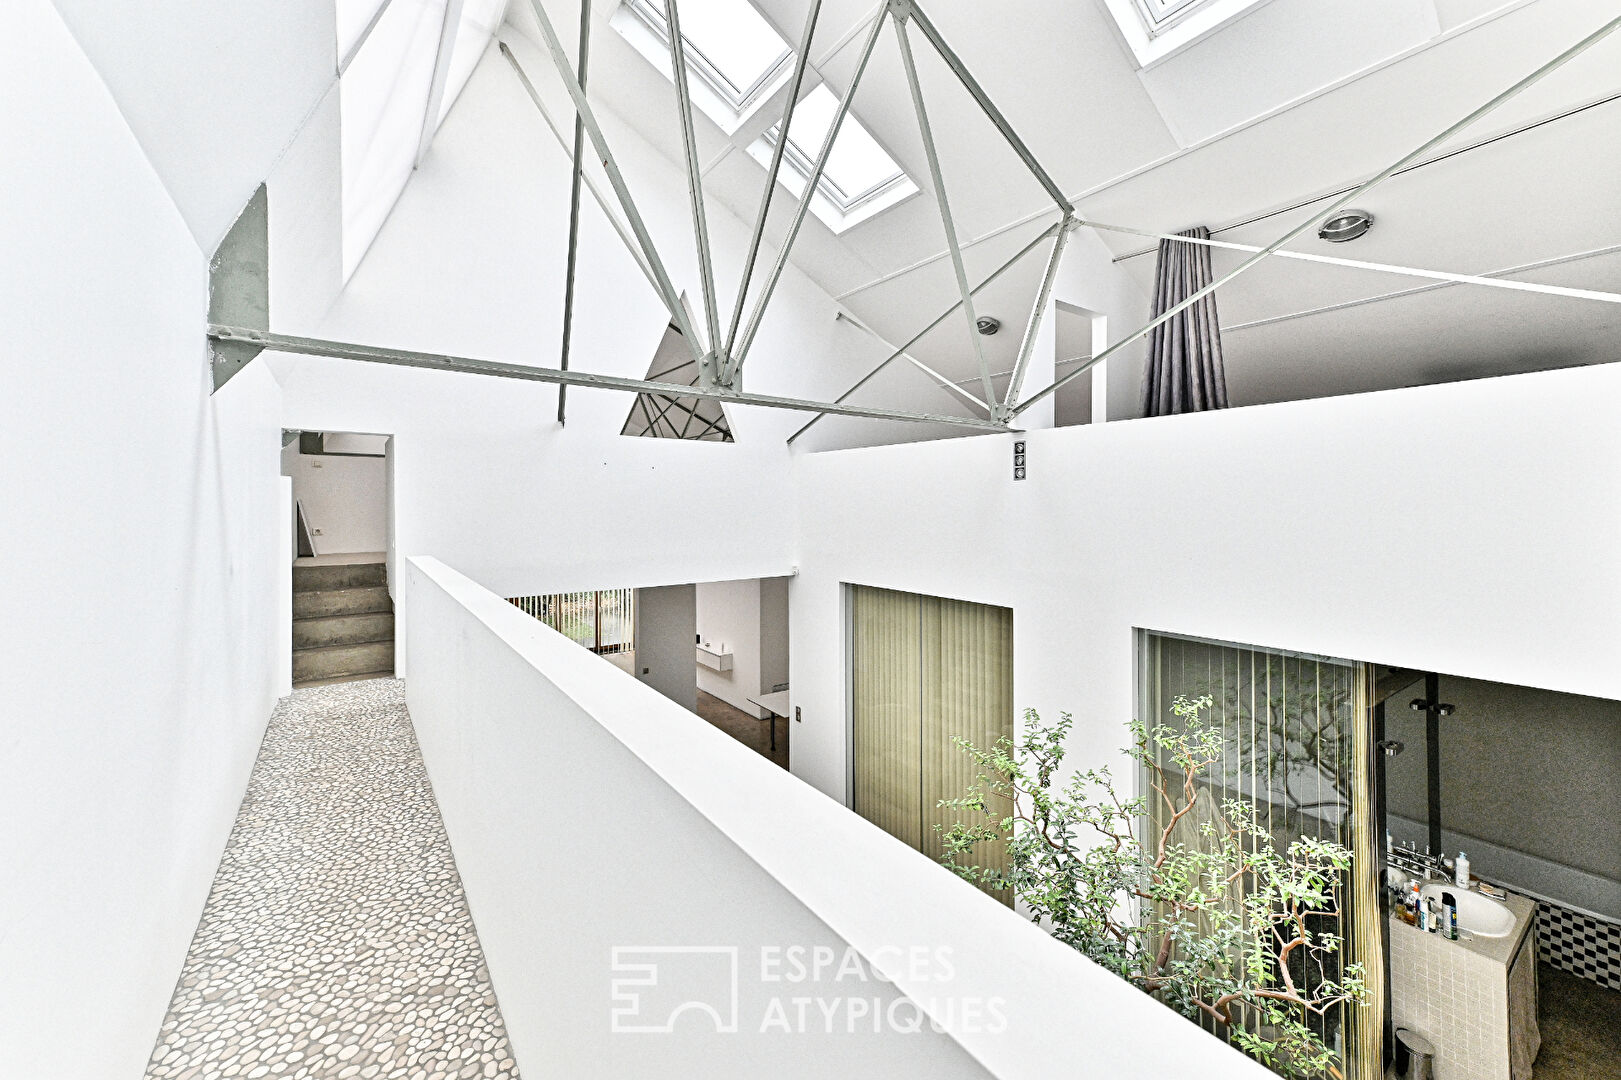 Japanese-style architect’s loft on the outskirts of Paris